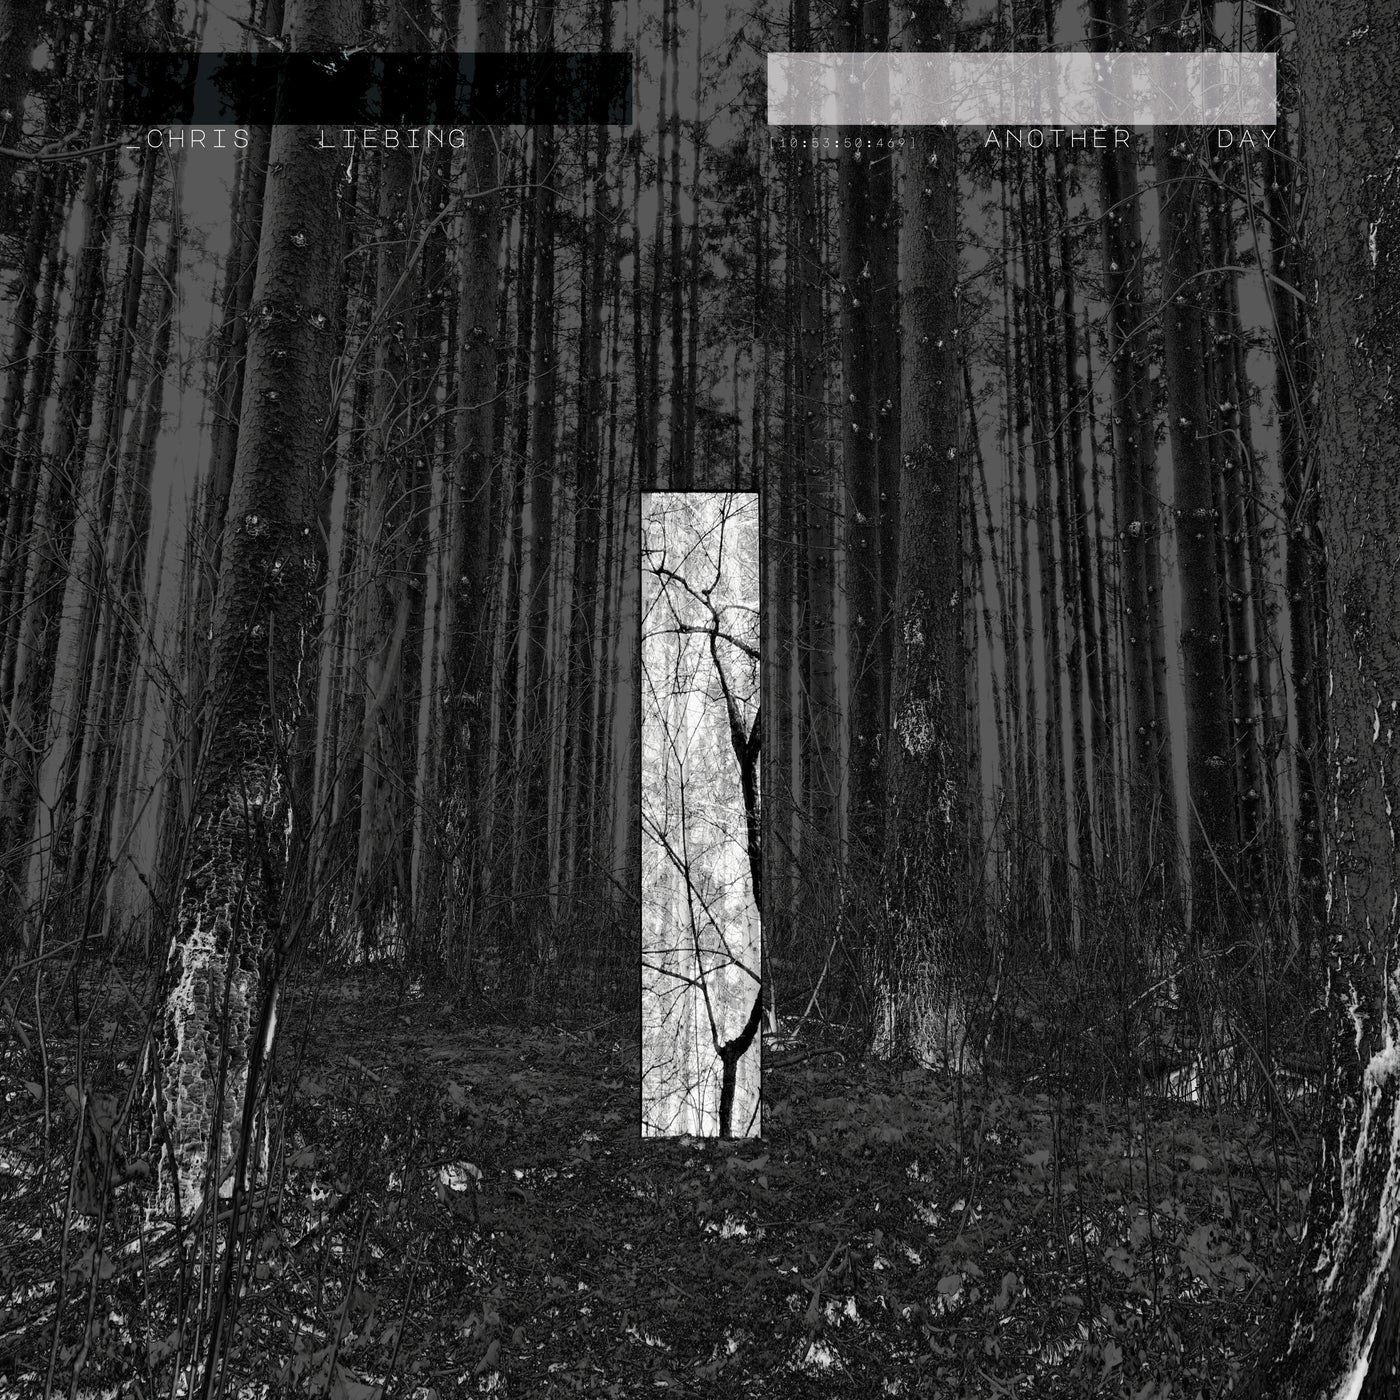 image cover: Chris Liebing, Ralf Hildenbeutel, Miles Cooper Seaton - Fault Line feat. Miles Cooper Seaton [Plaid Remix] / I6STUMM469